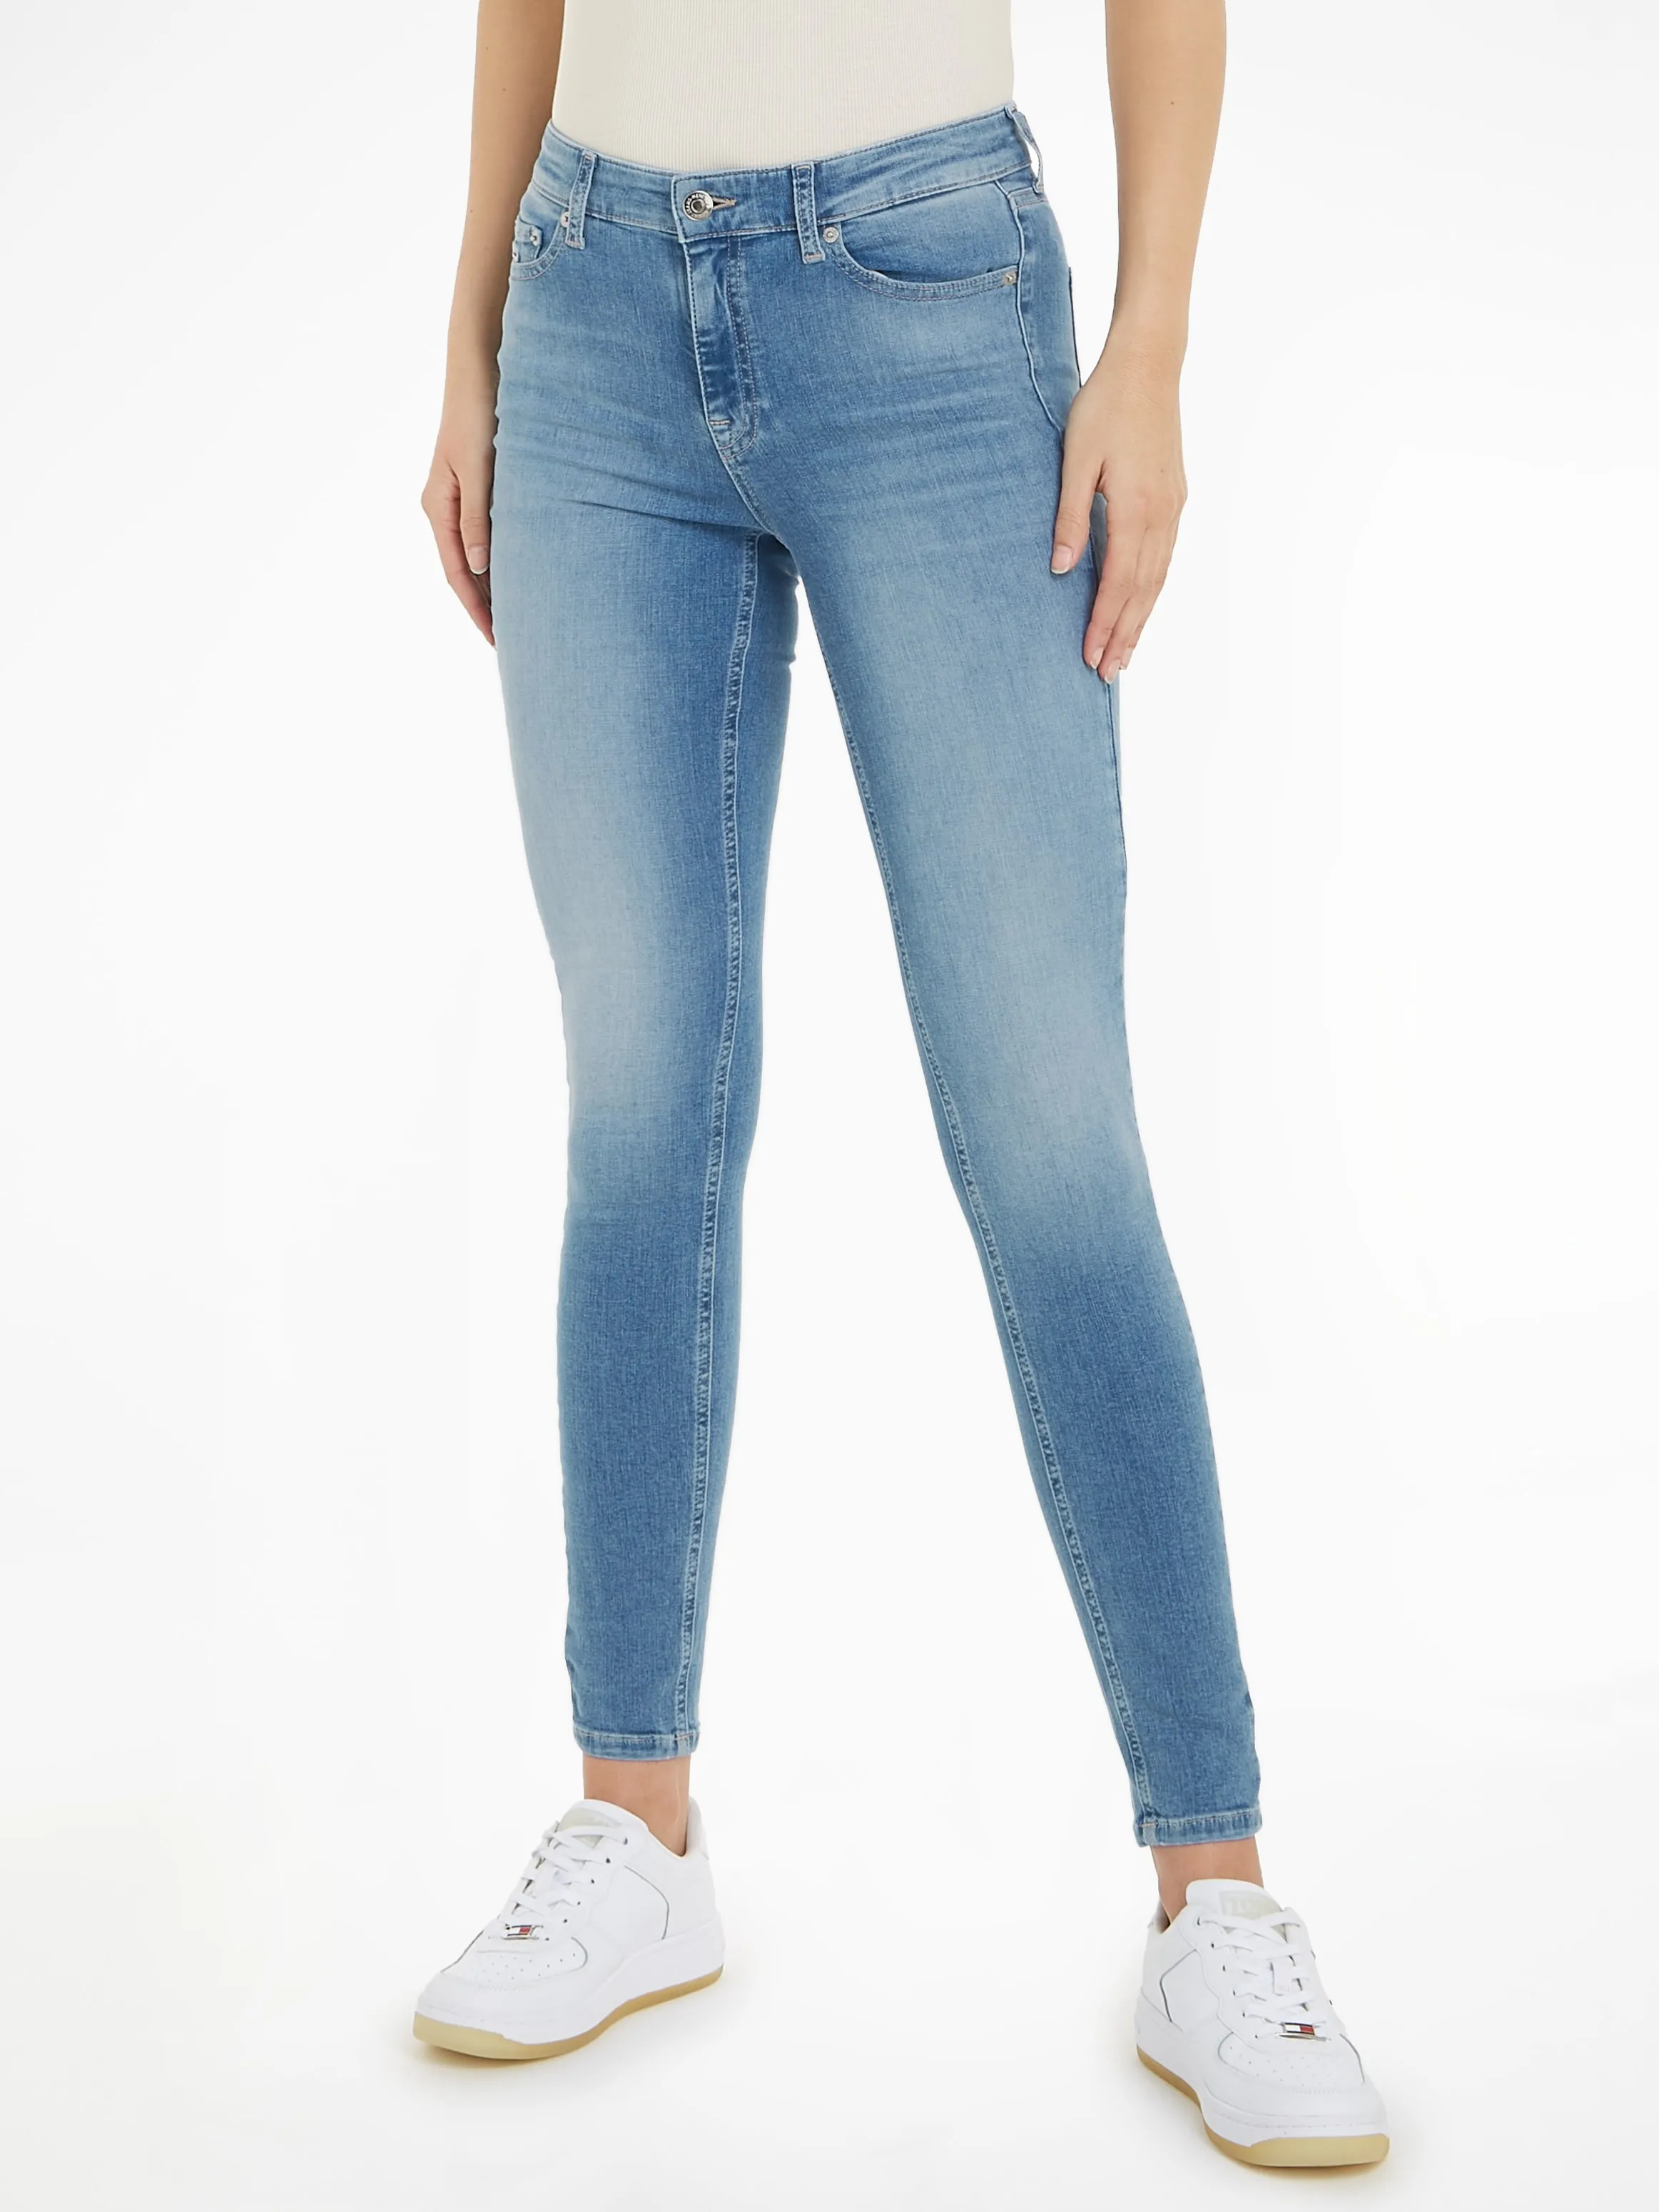 Bequeme Jeans TOMMY JEANS "Nora" Gr. 28, Länge 30, blau (denim light) Damen Jeans mit Ledermarkenlabel